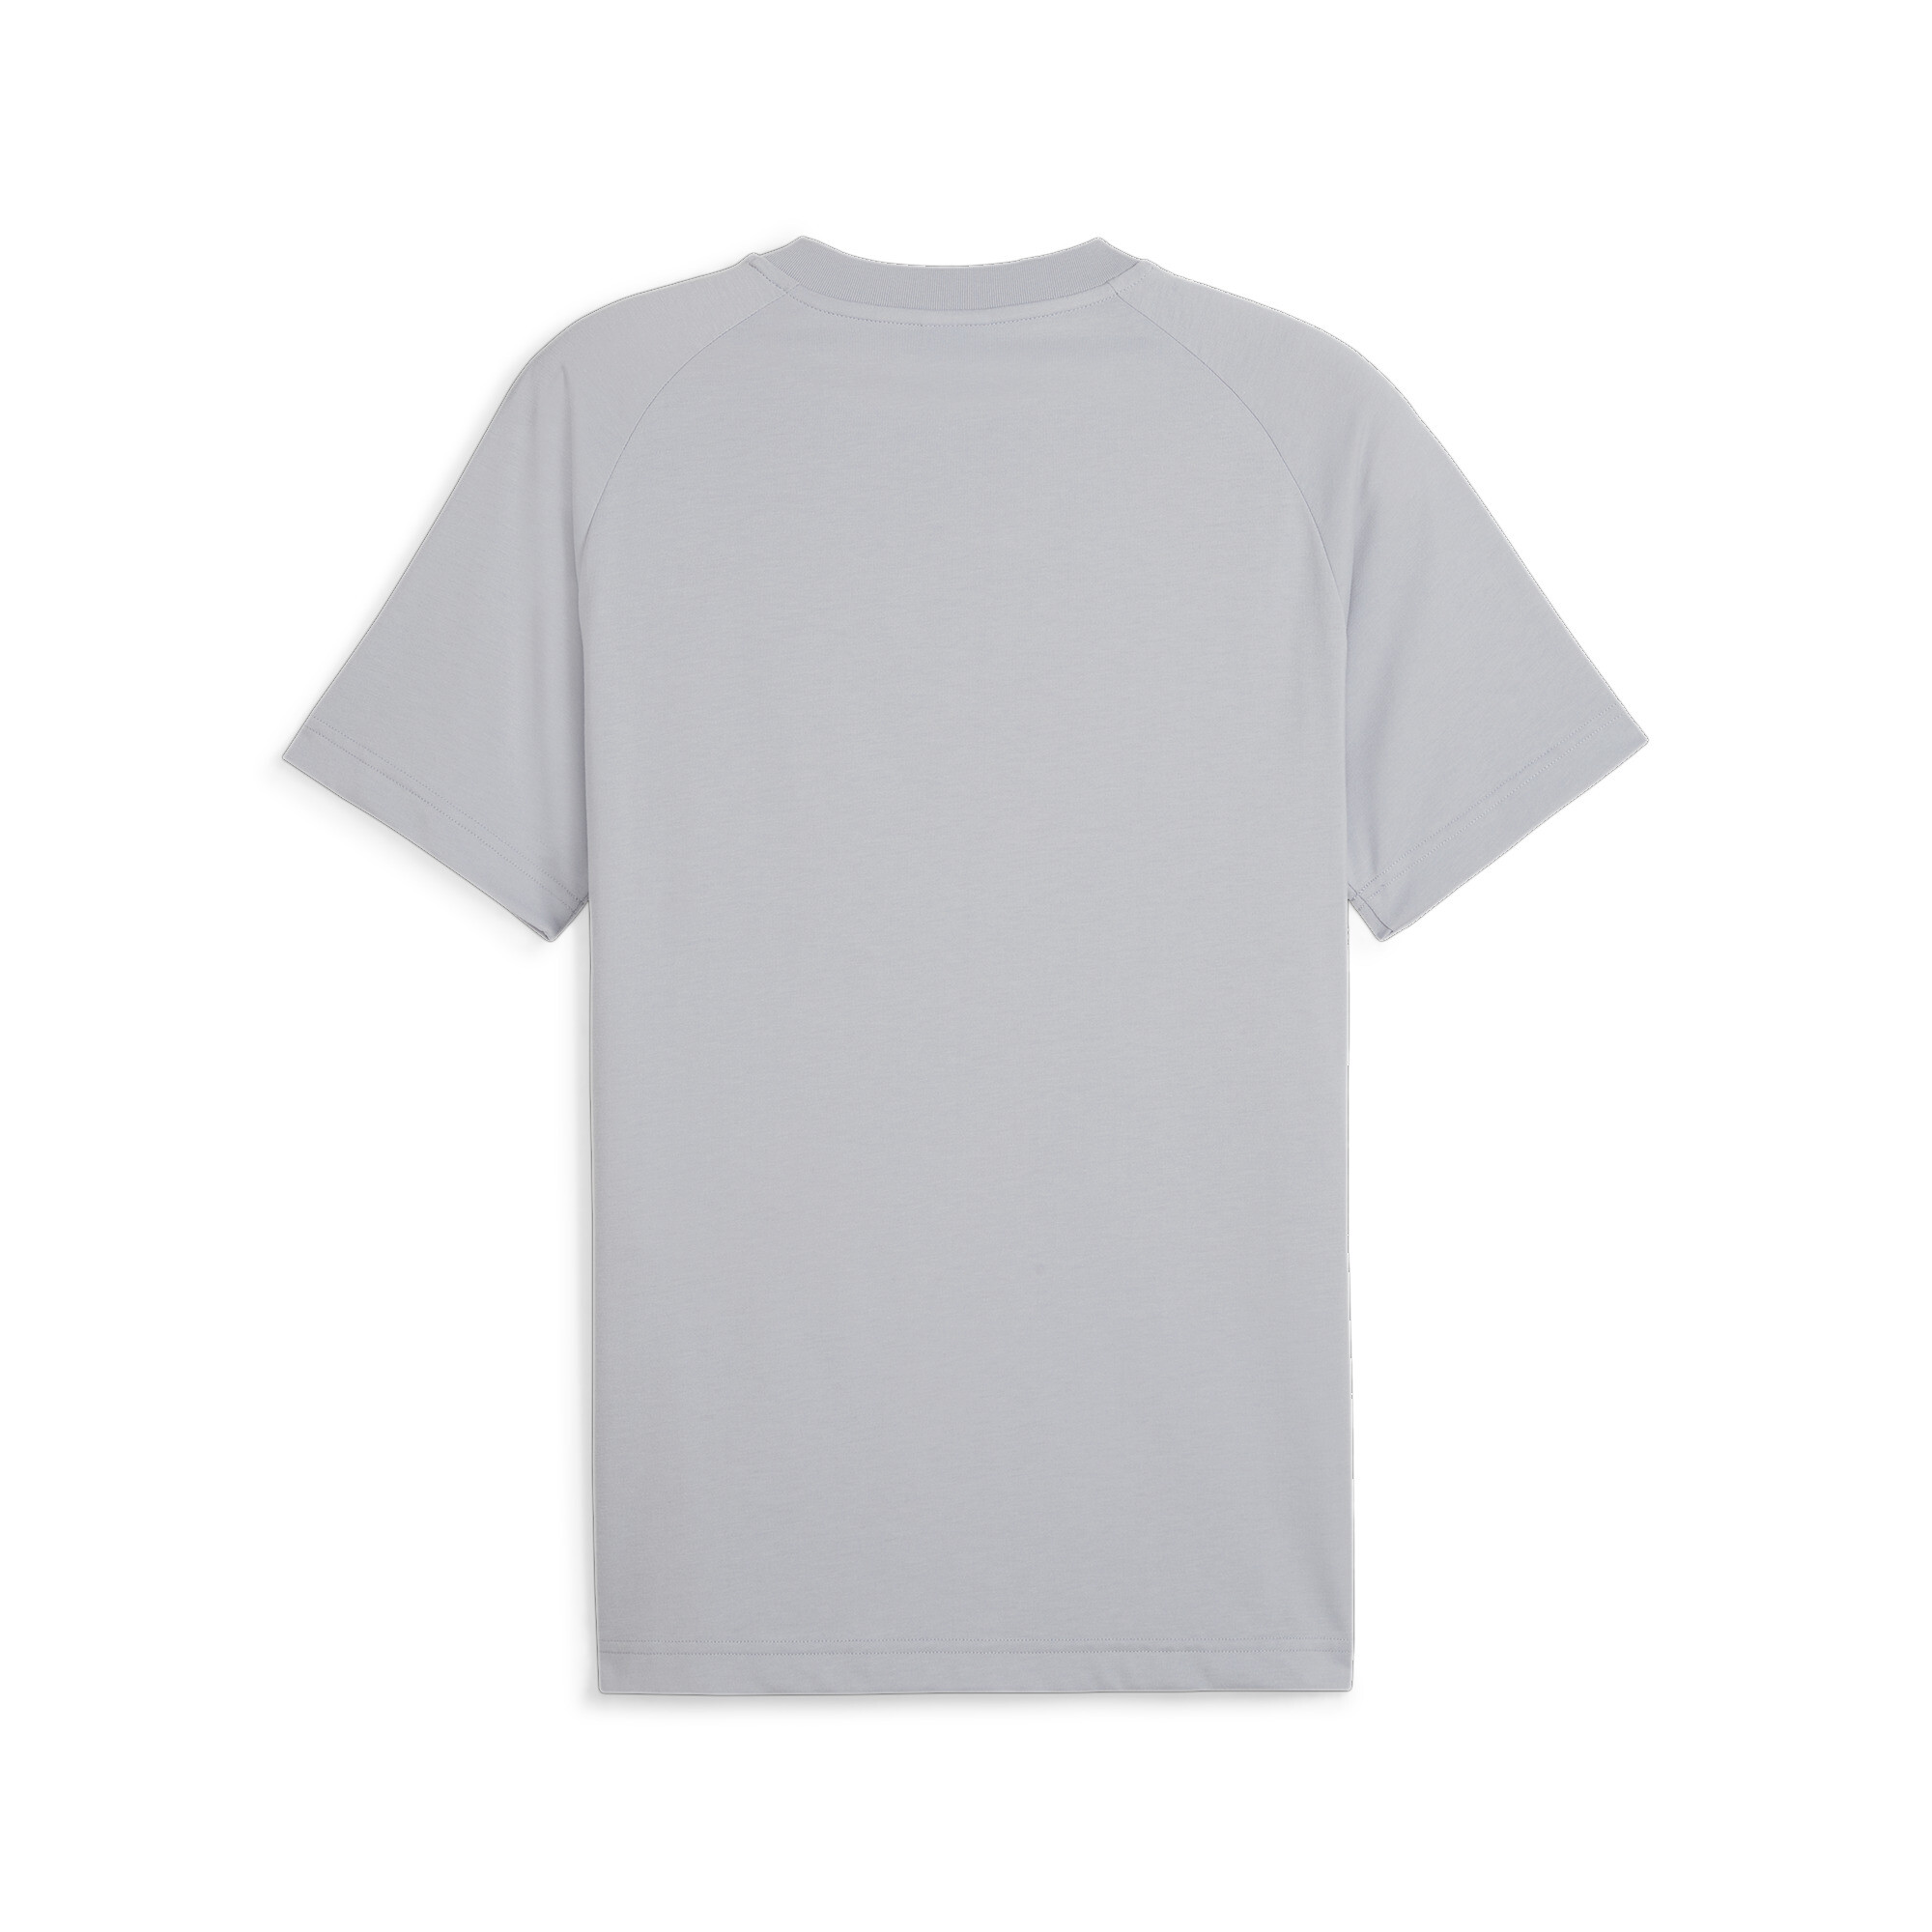 Men's PUMATECH Pocket T-Shirt In Gray, Size Large